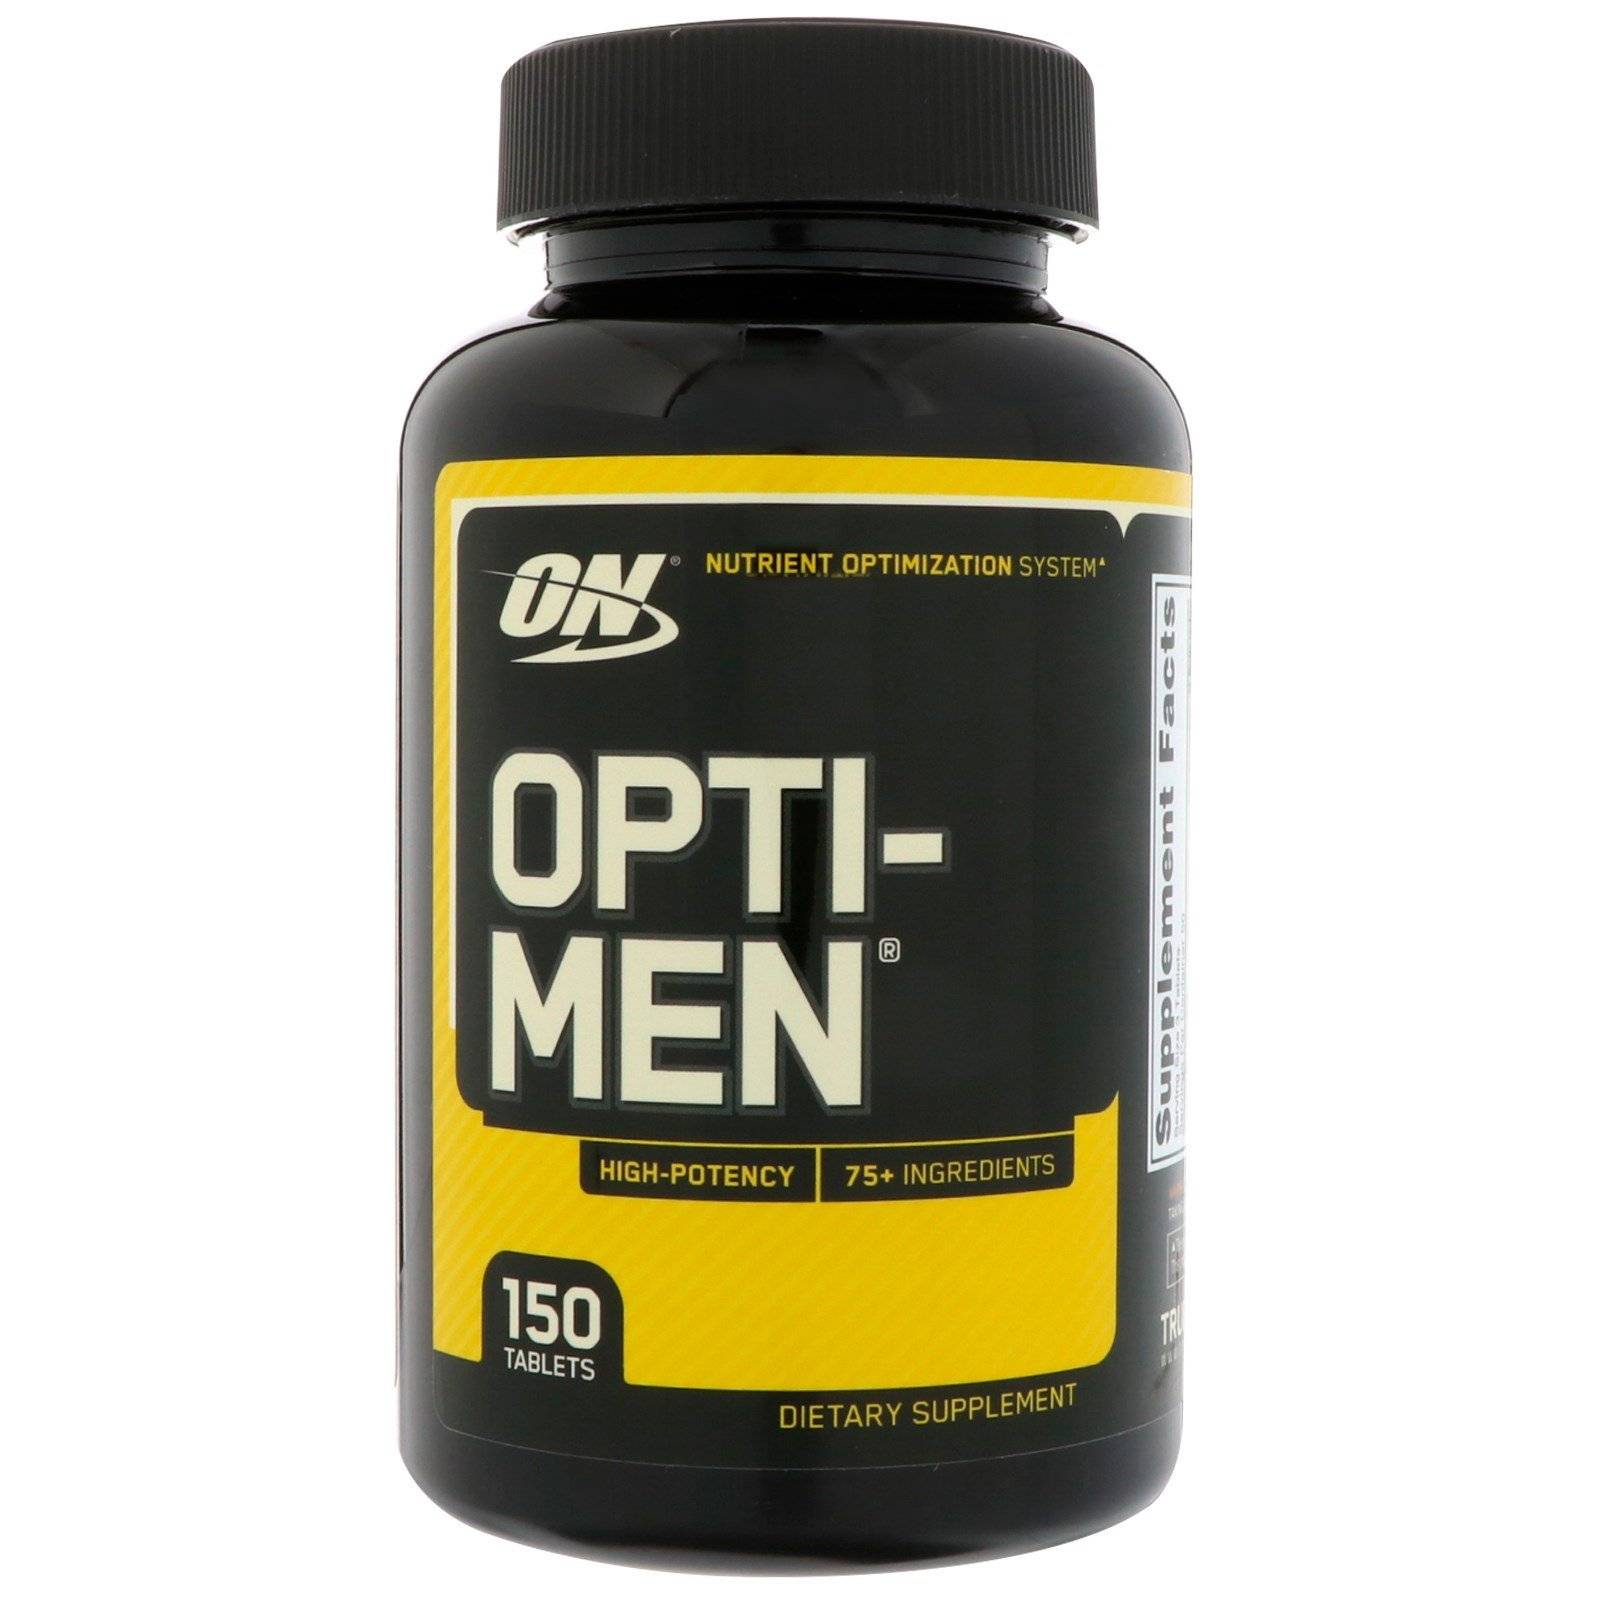 Opti-women (optimum nutrition)